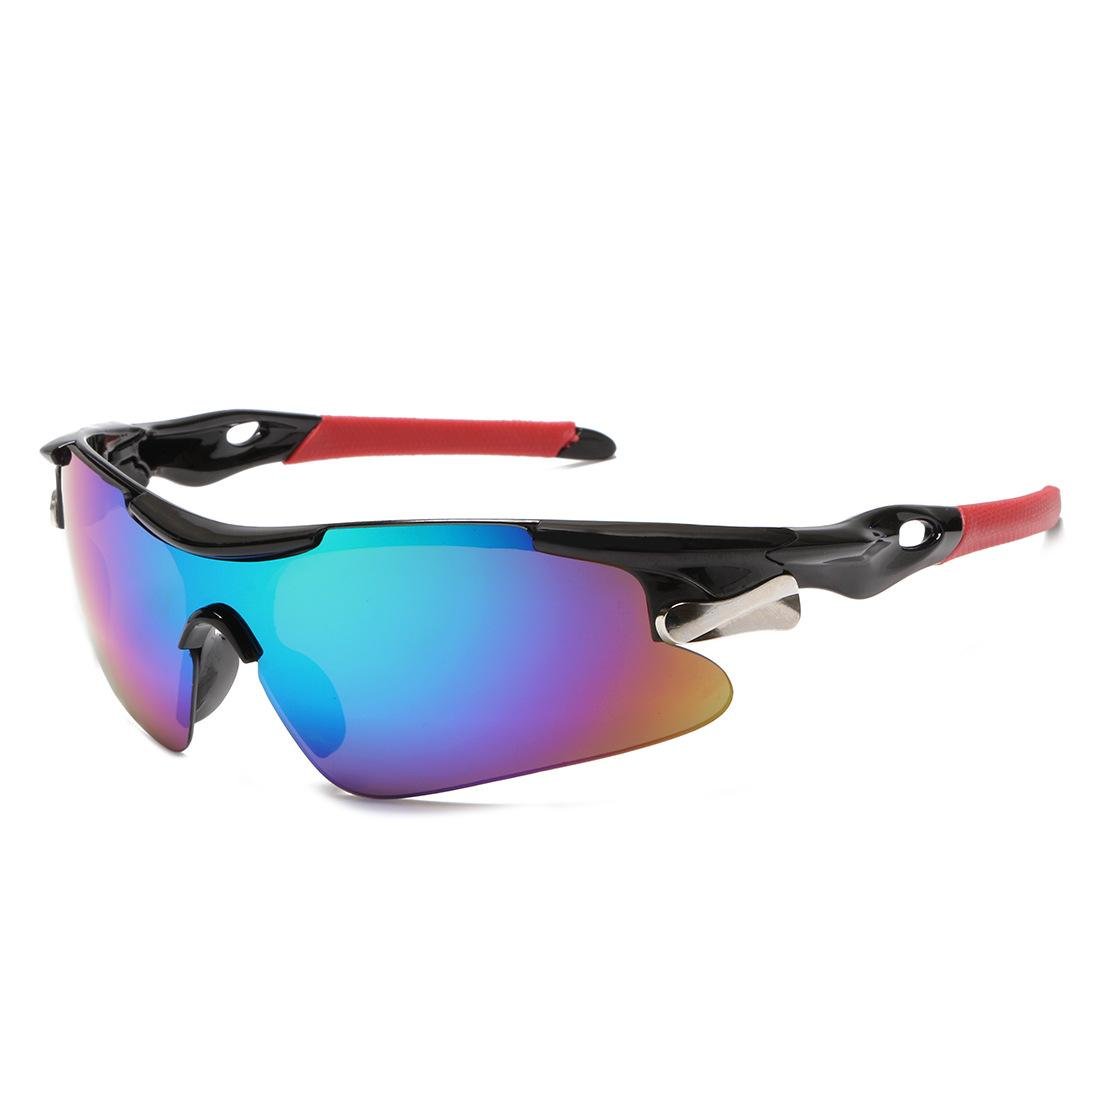 eyeglasses Glasses sunglasses eyewear for skiing 3